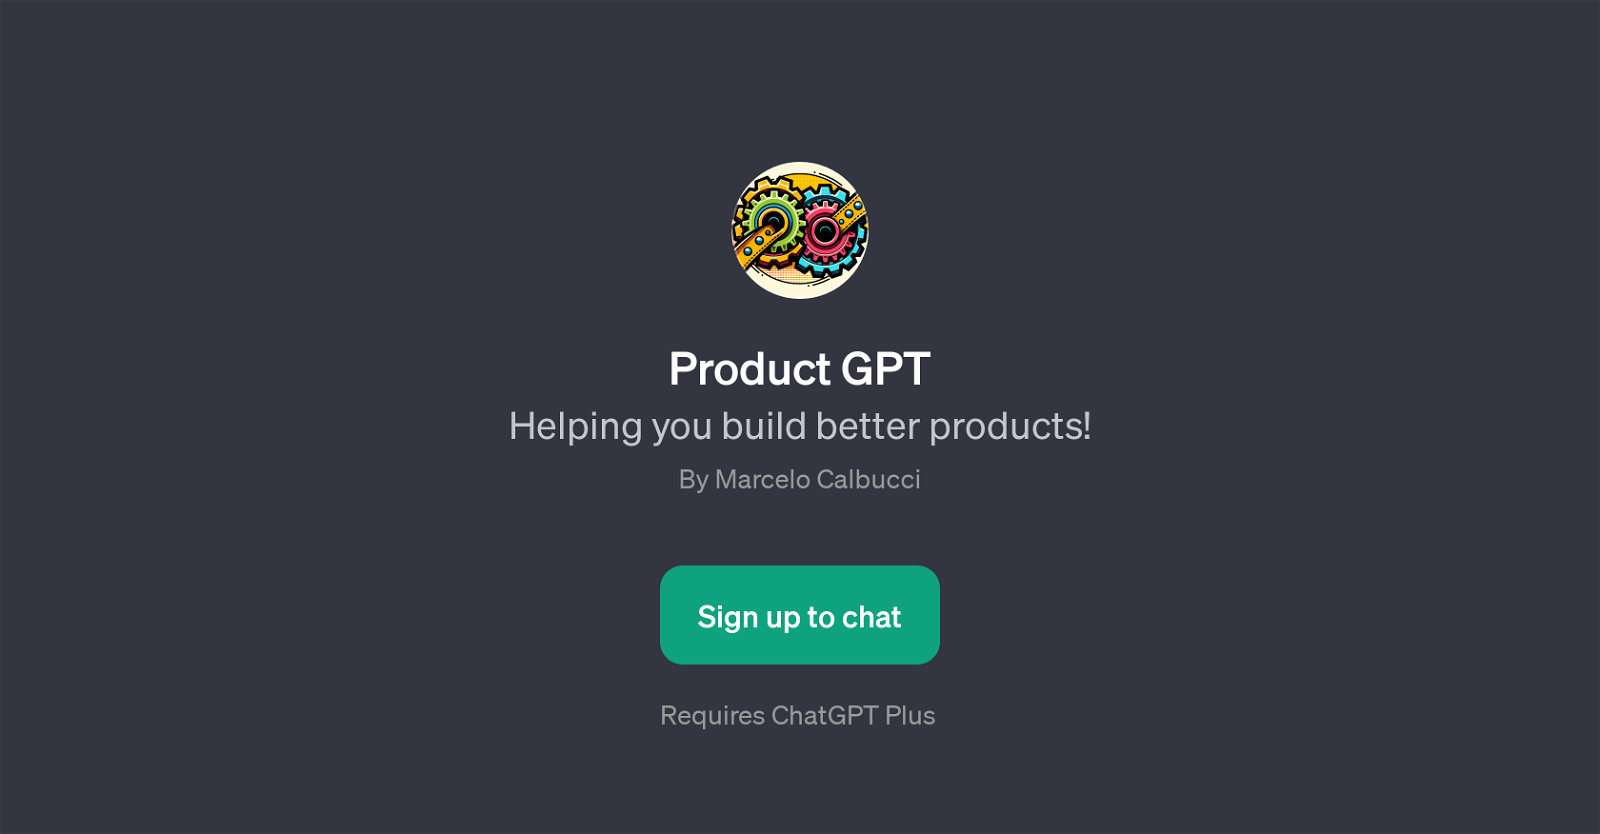 Product GPT website